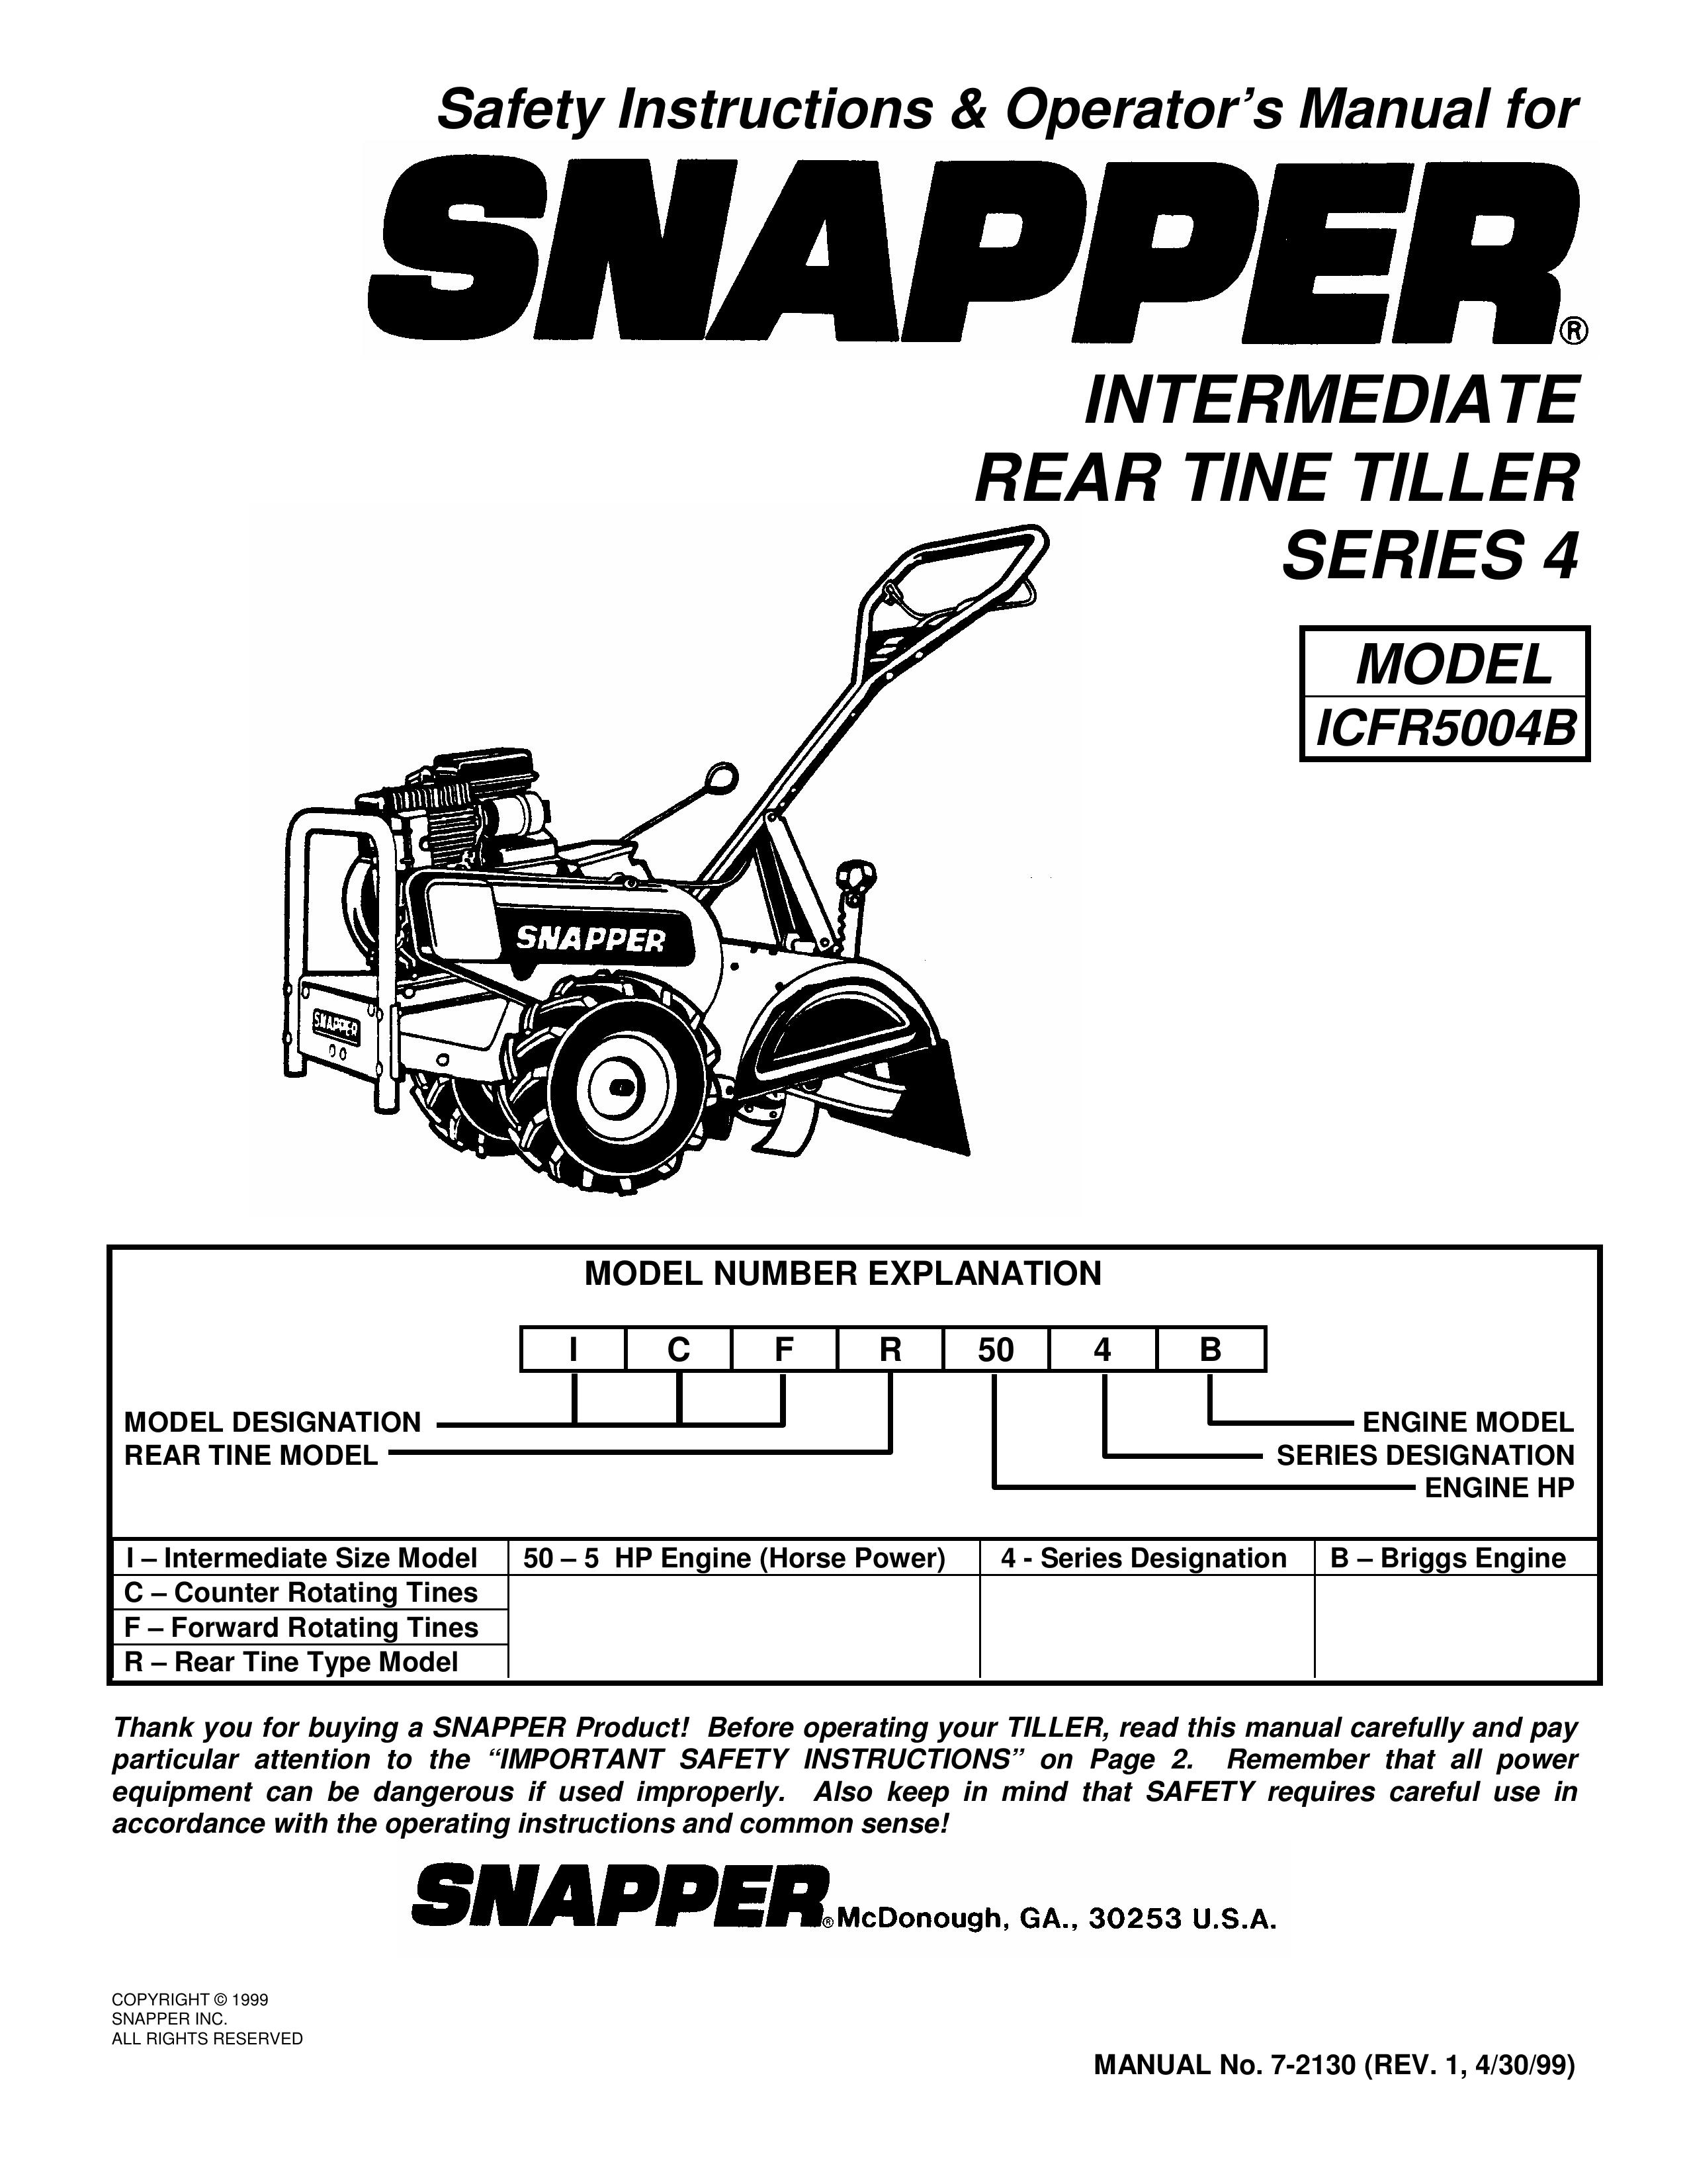 Snapper ICFR5004B Tiller User Manual